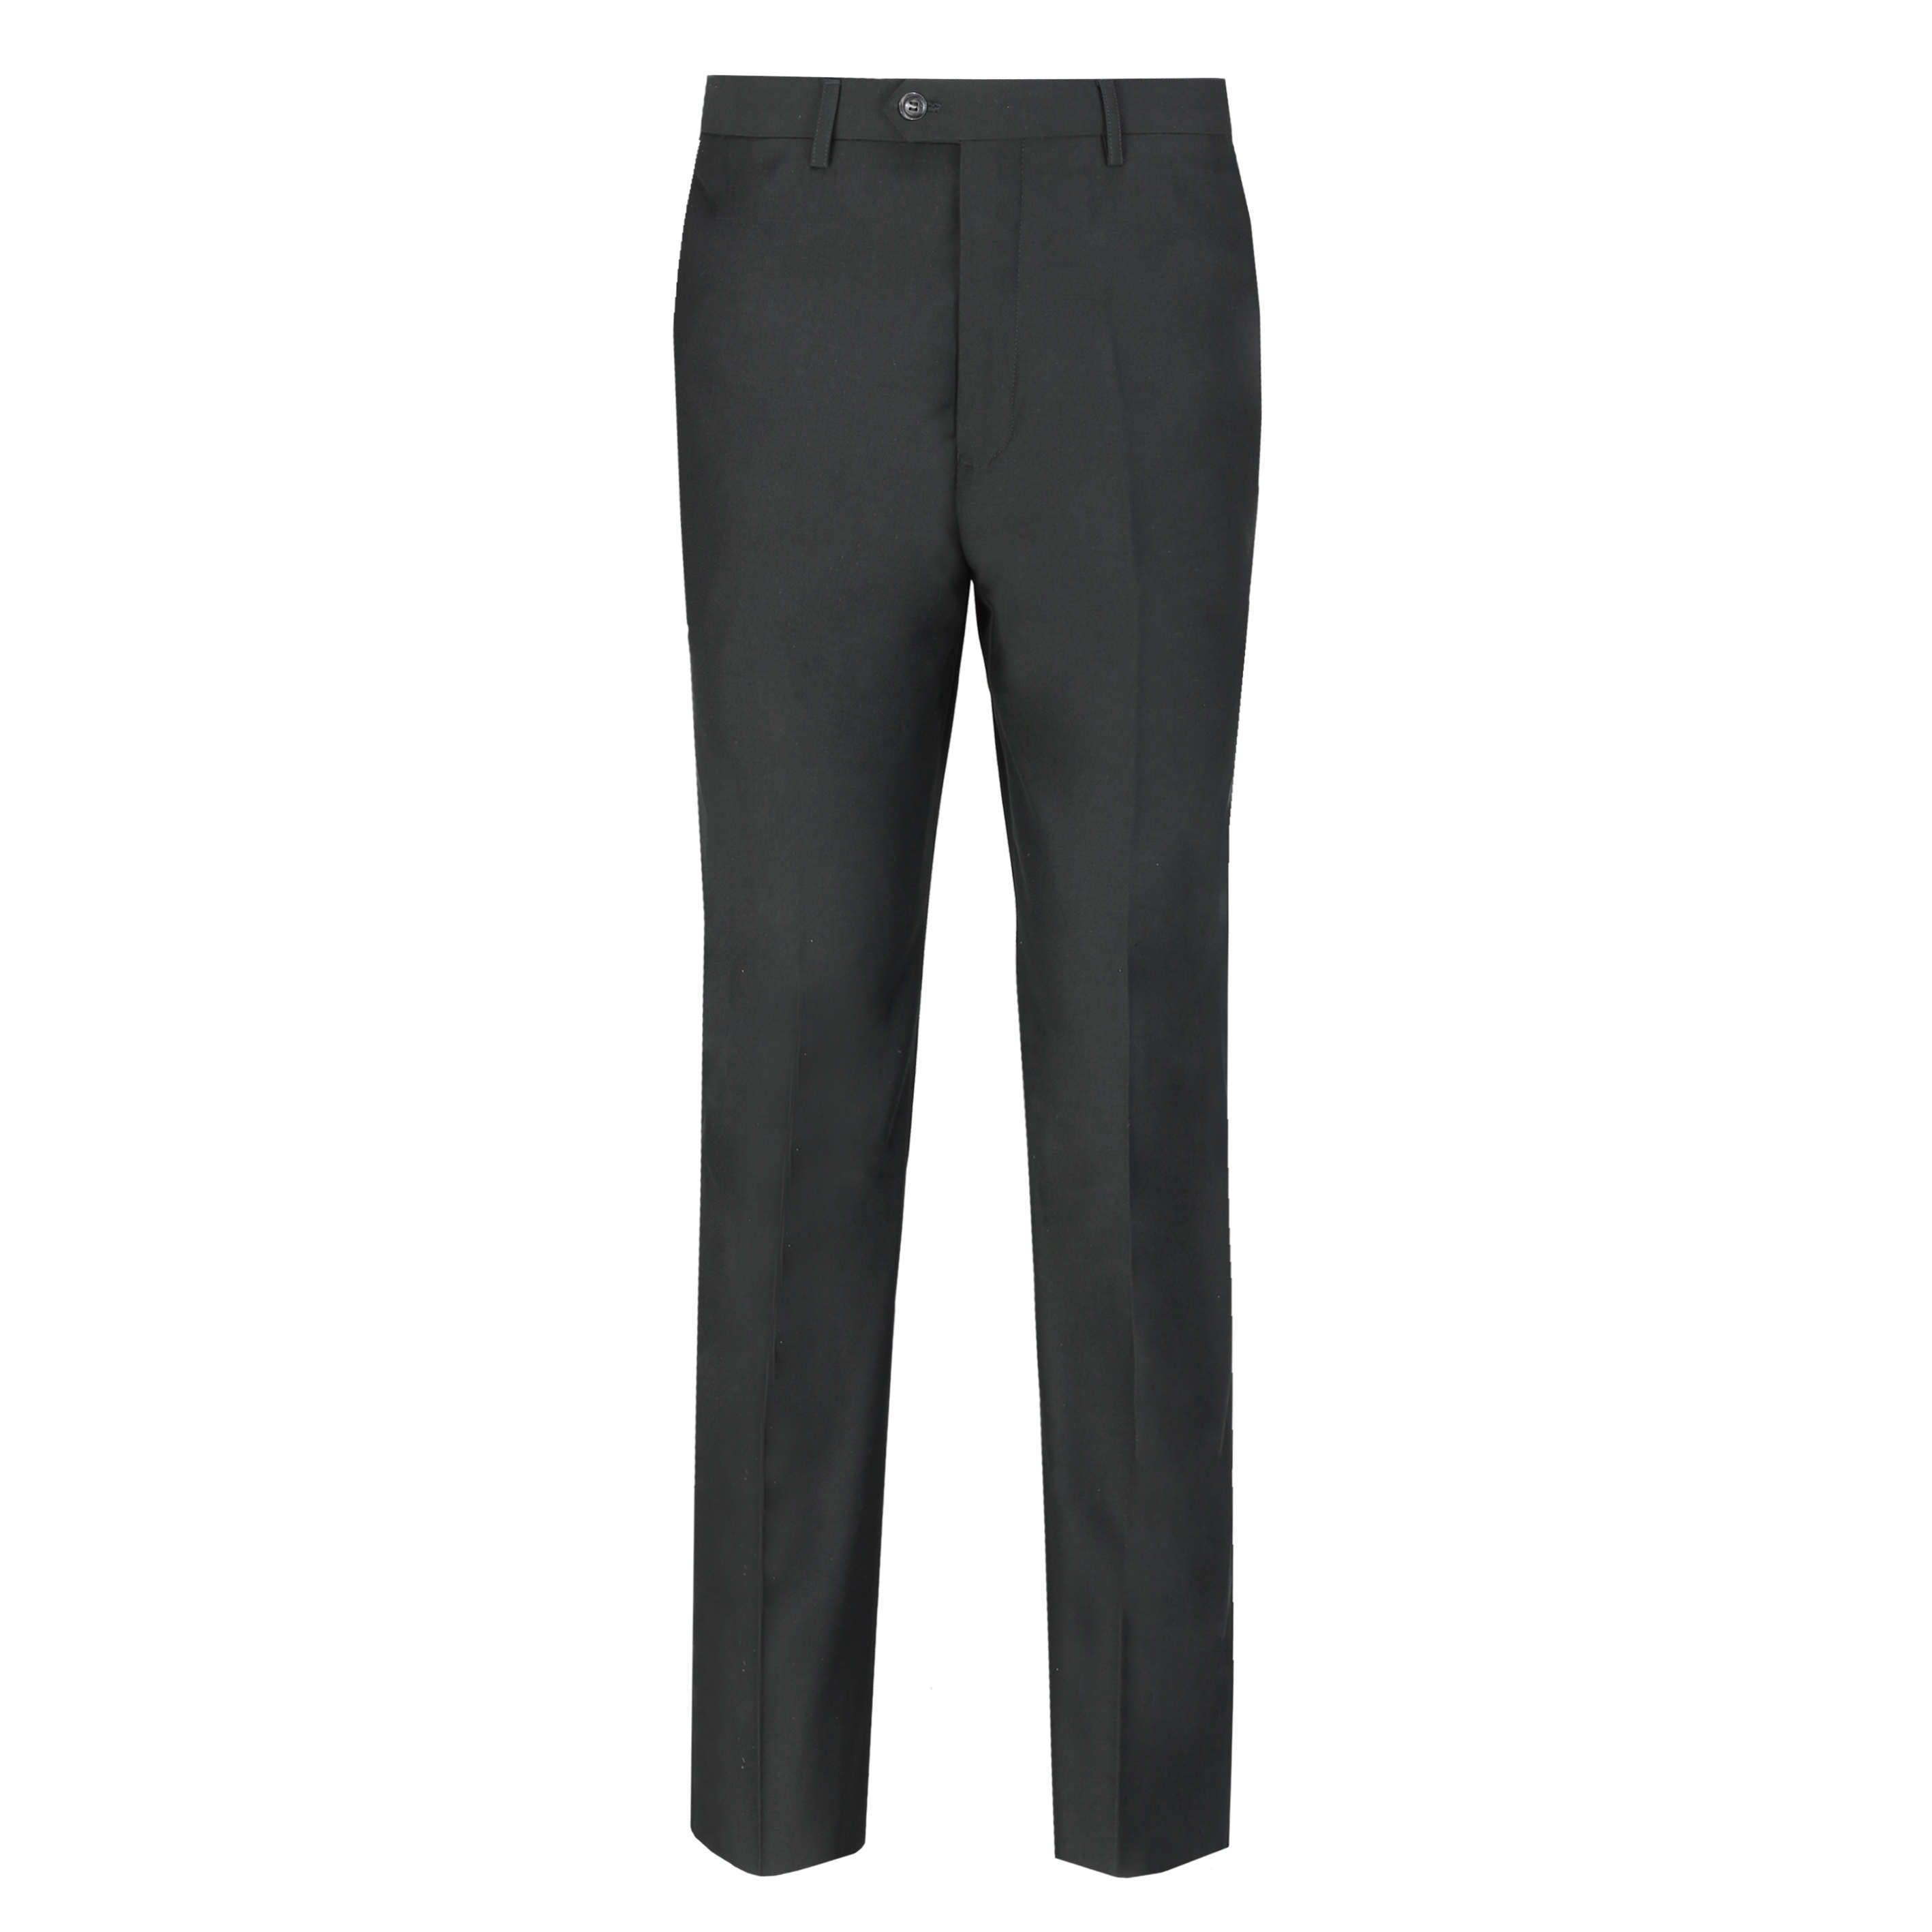 Jross - Black Formal Suit Trouser